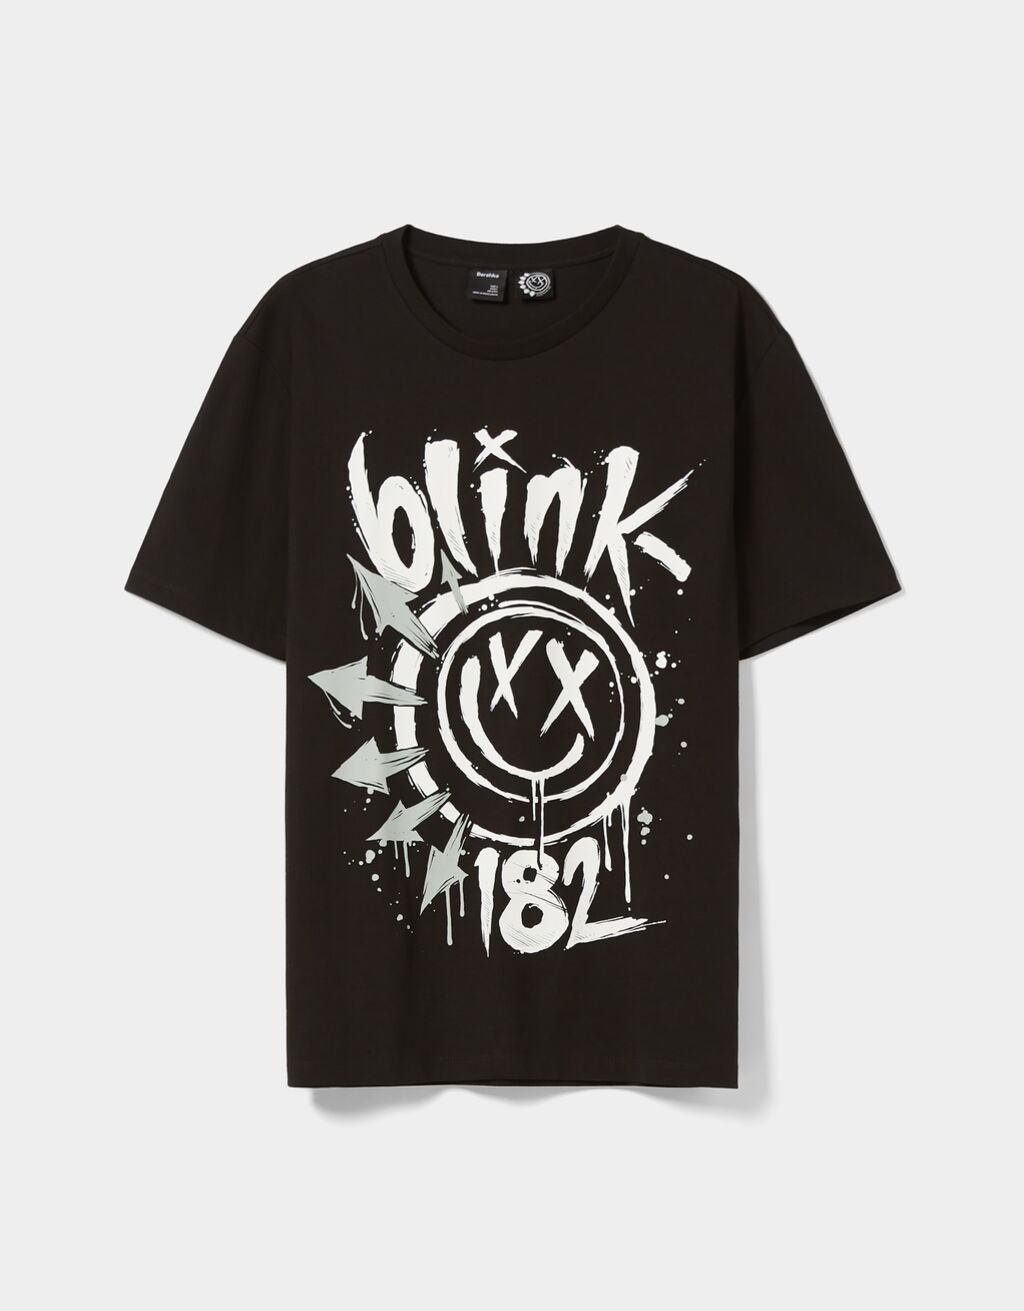 Camiseta manga curta regular fit estampado Blink 182